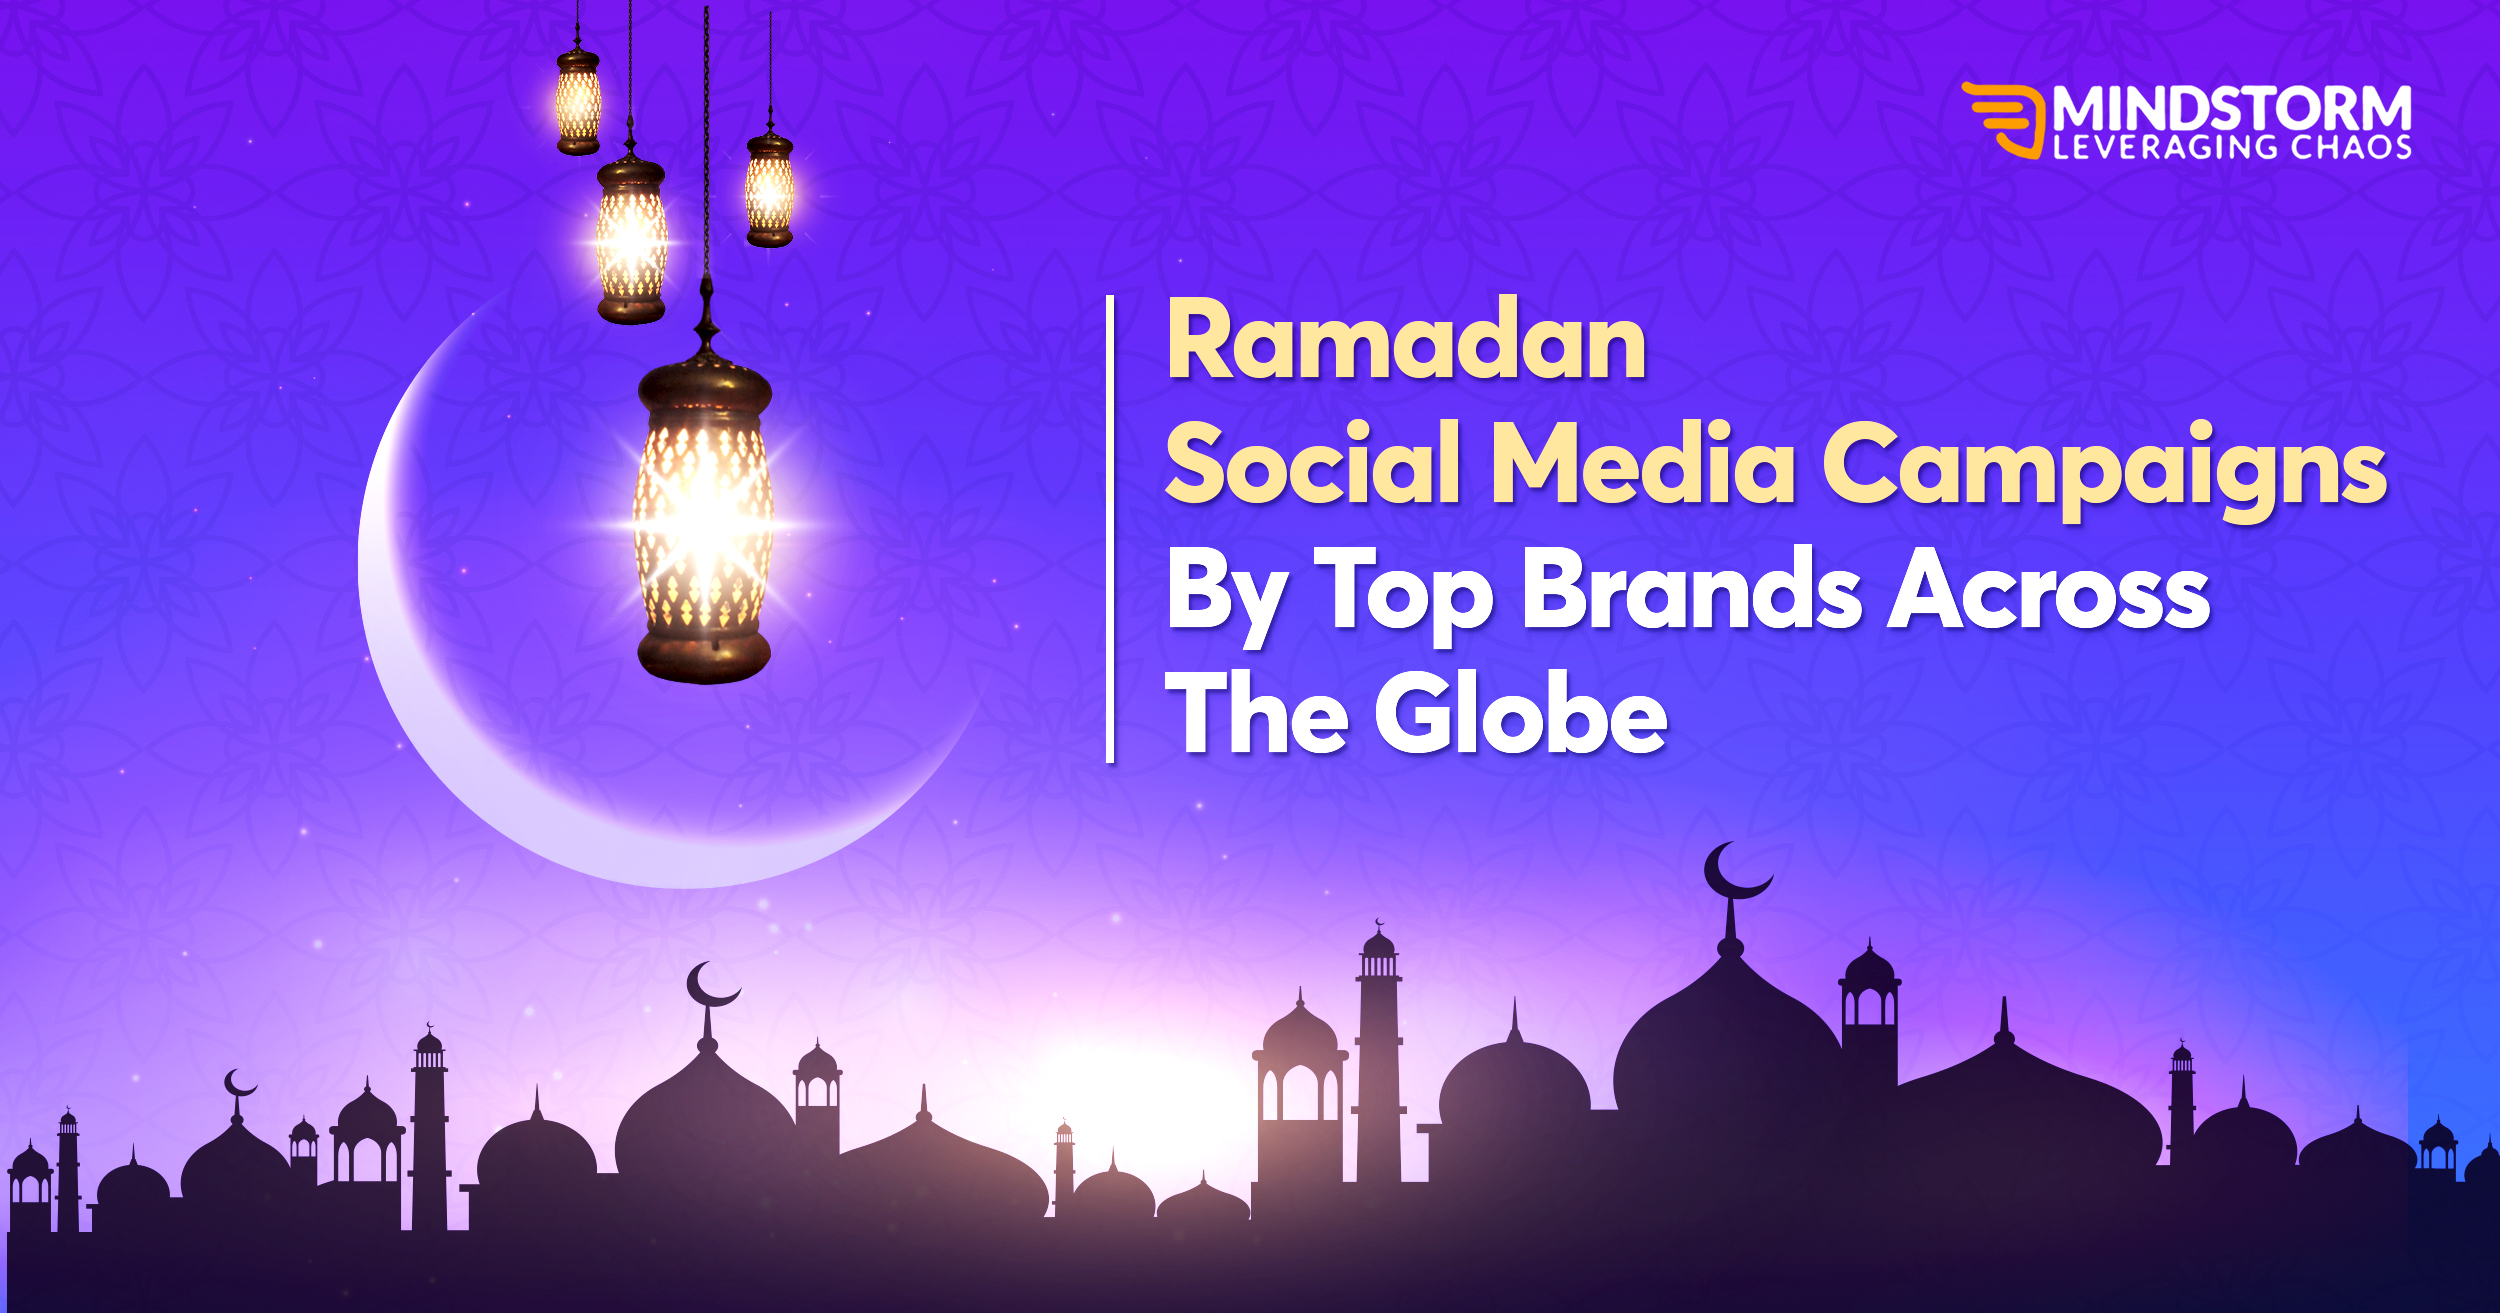 Ramadan Social Media Campaigns by Top Brands Across the Globe